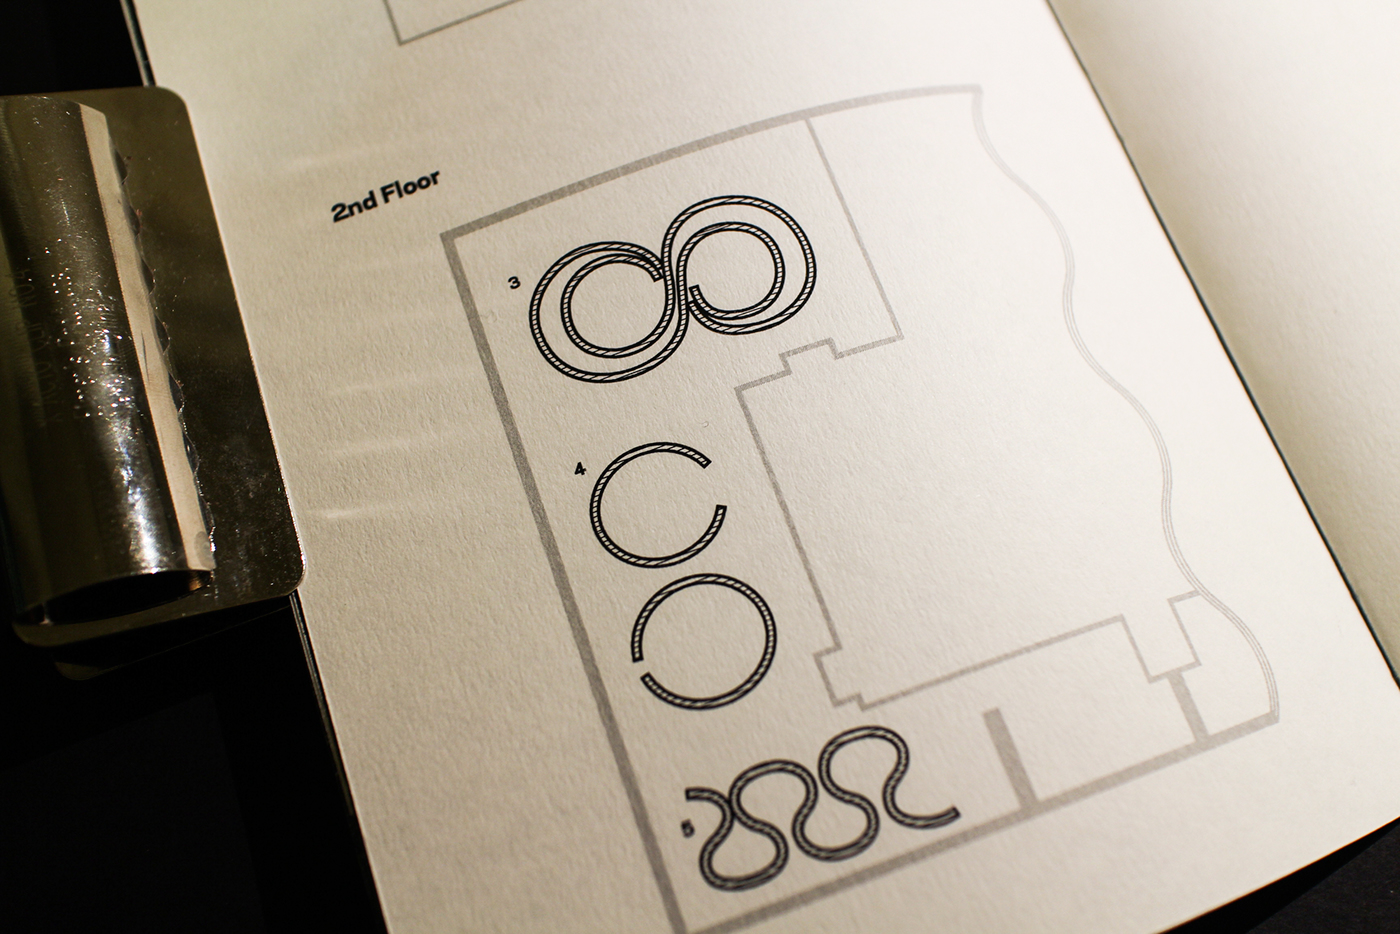 editorial design  publication design brochure graphic design  Adobe InDesign adobe illustrator Adobe Photoshop Photography  Richard Serra moma